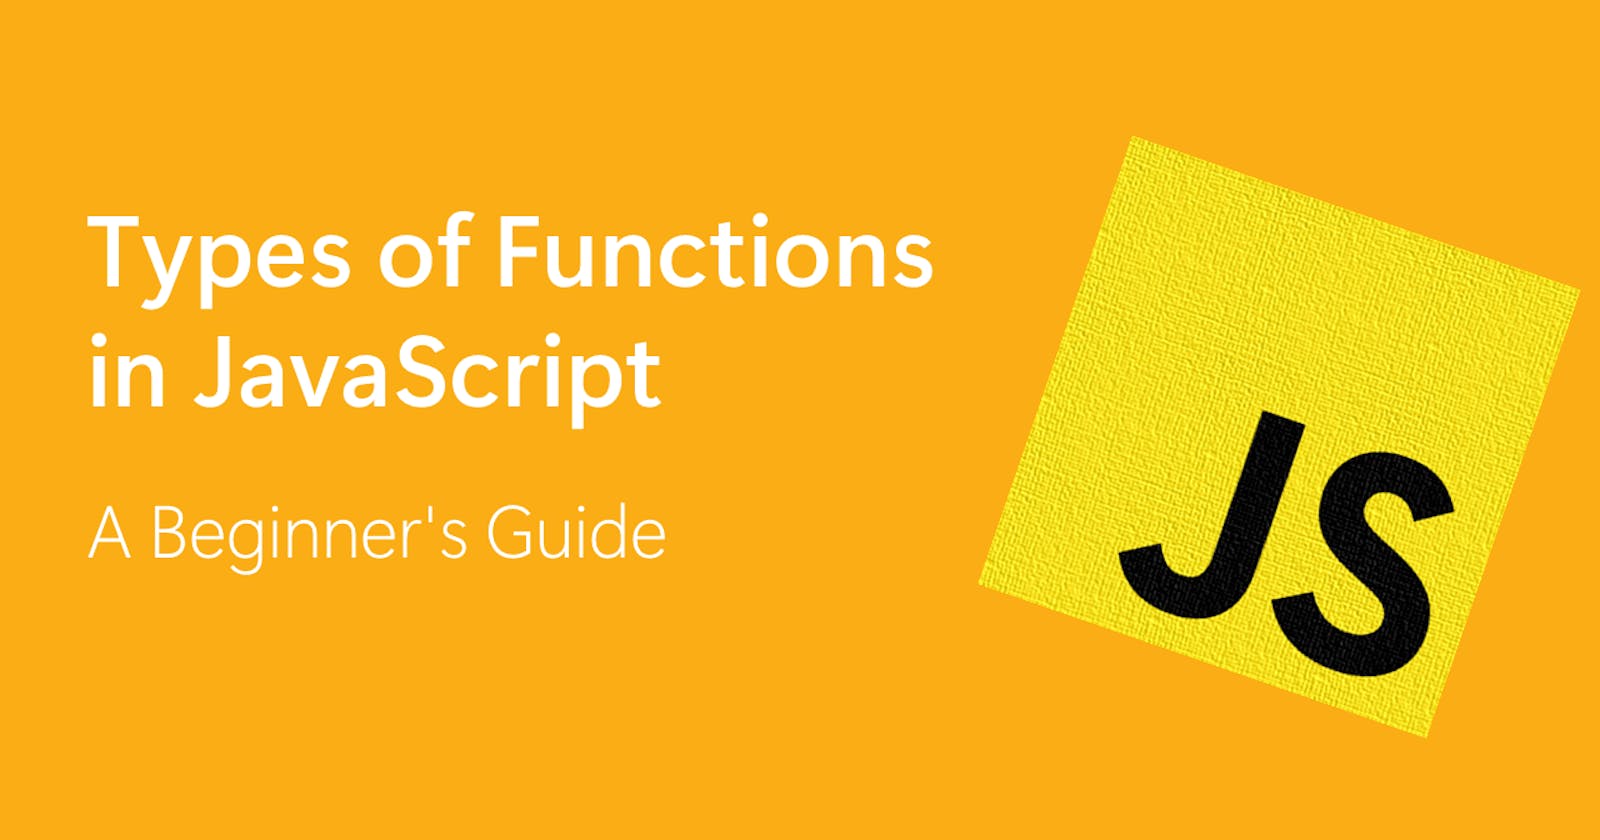 Types of Functions in Java Script